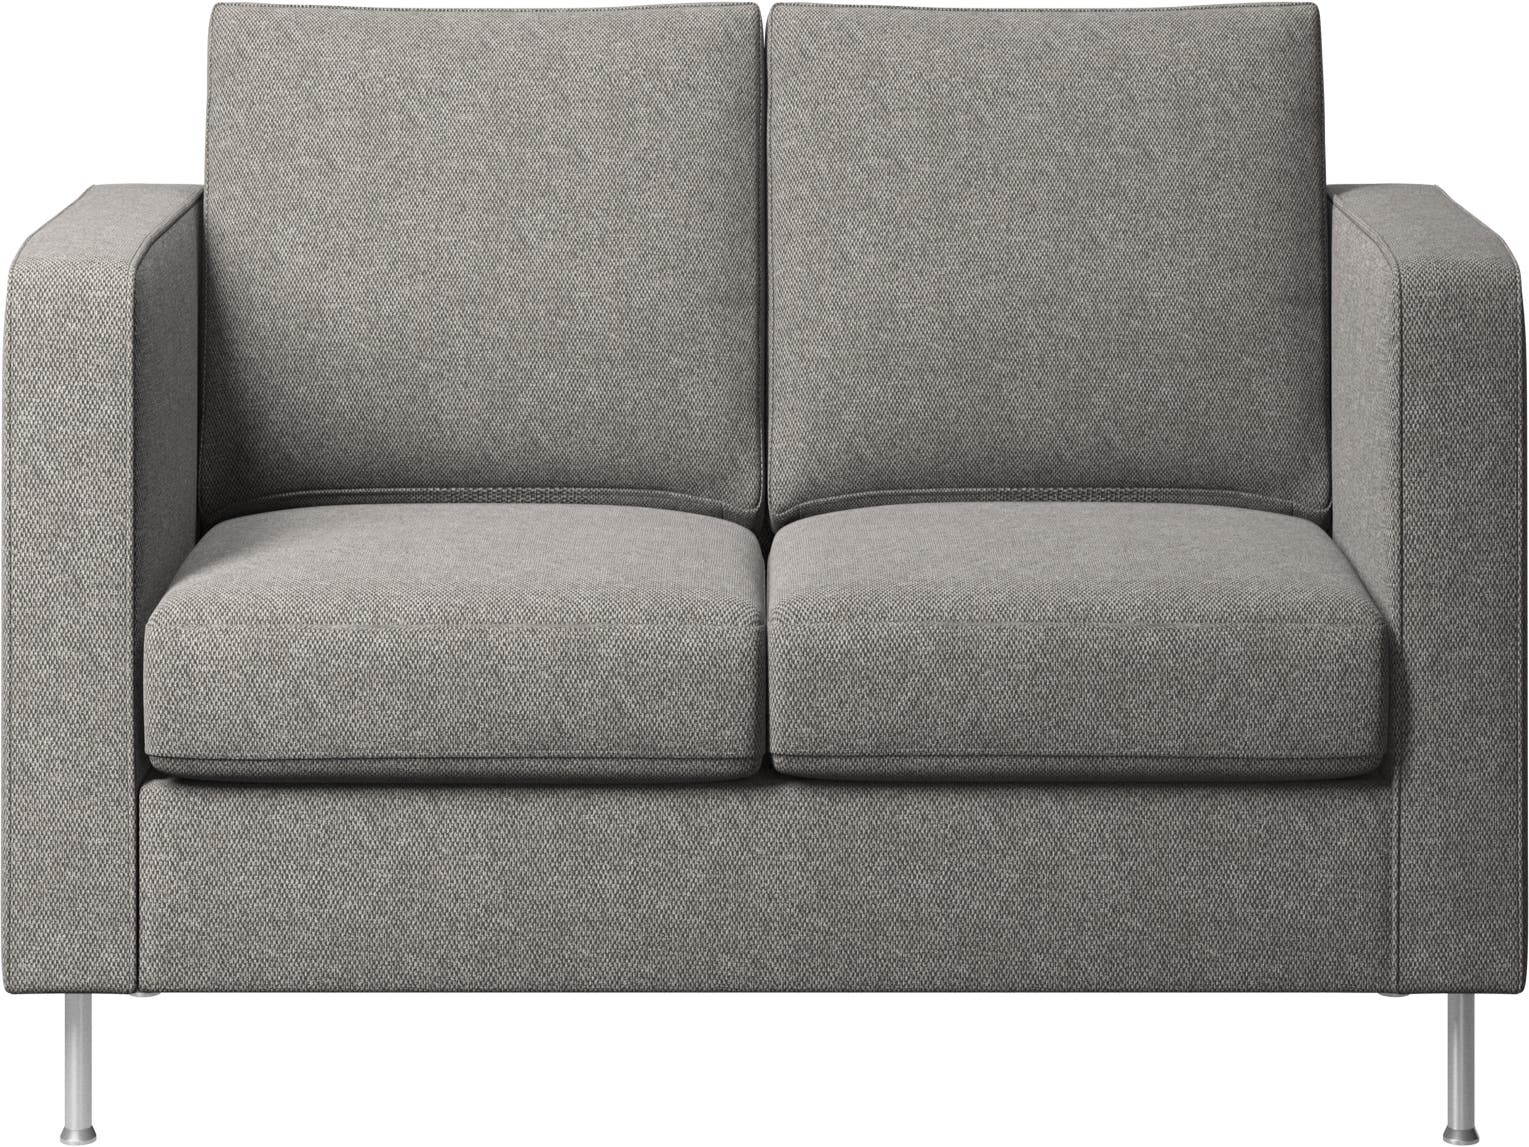 Indivi sofa | BoConcept